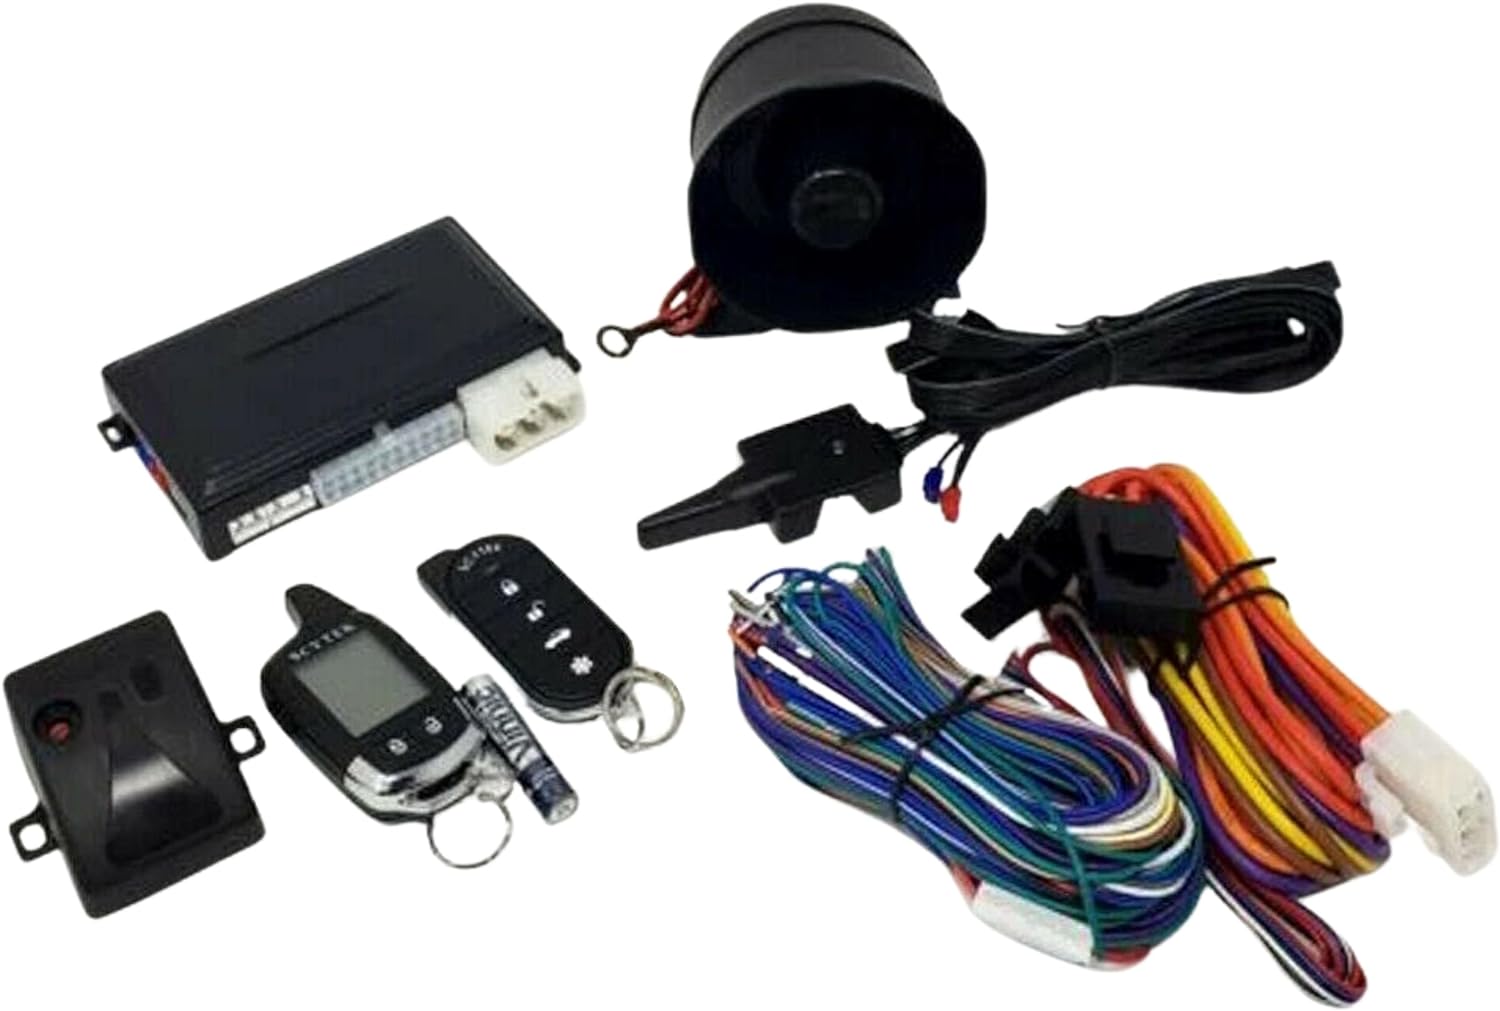 Scytek A4.2W Car Alarm Security System Review